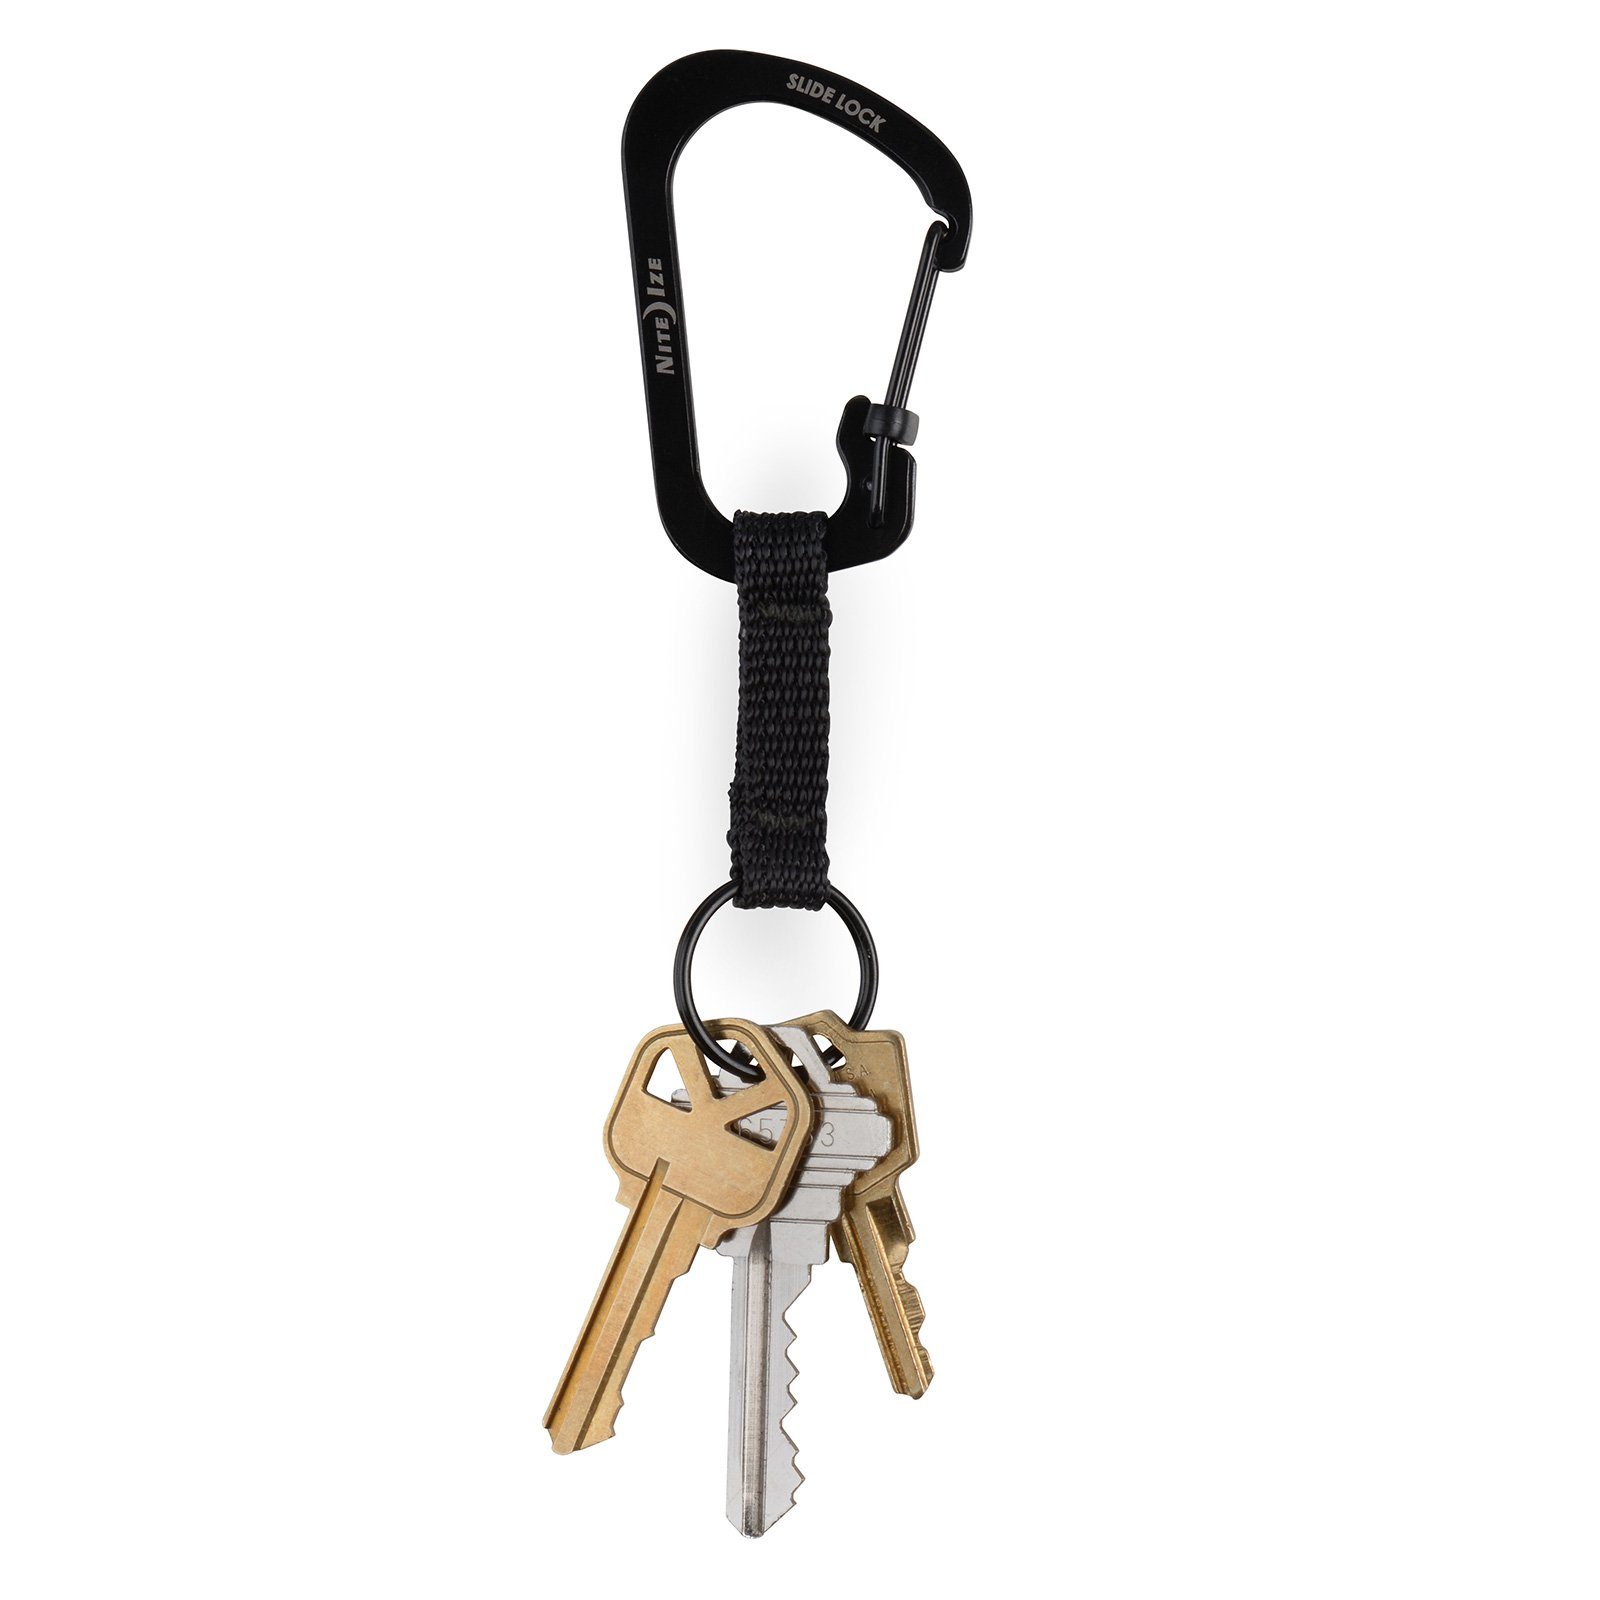 Nite Ize Karabiner SlideLock Key Ring Mini Karabiner Schlüssel Ring, Anhänger Schnapp Haken schwarz